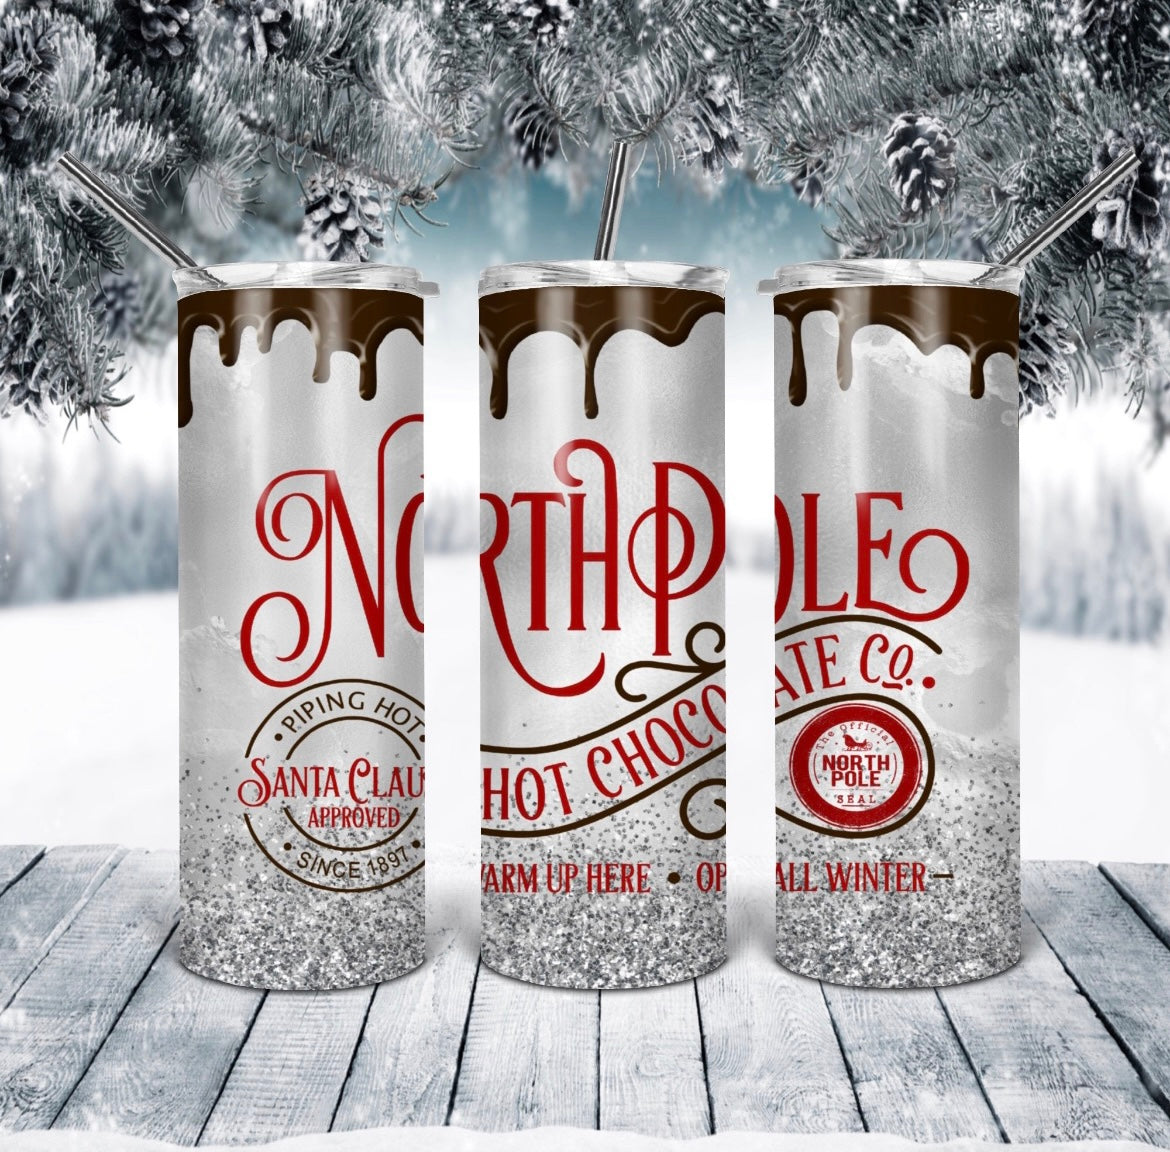 North Pole Hot-Chocolate-Co.